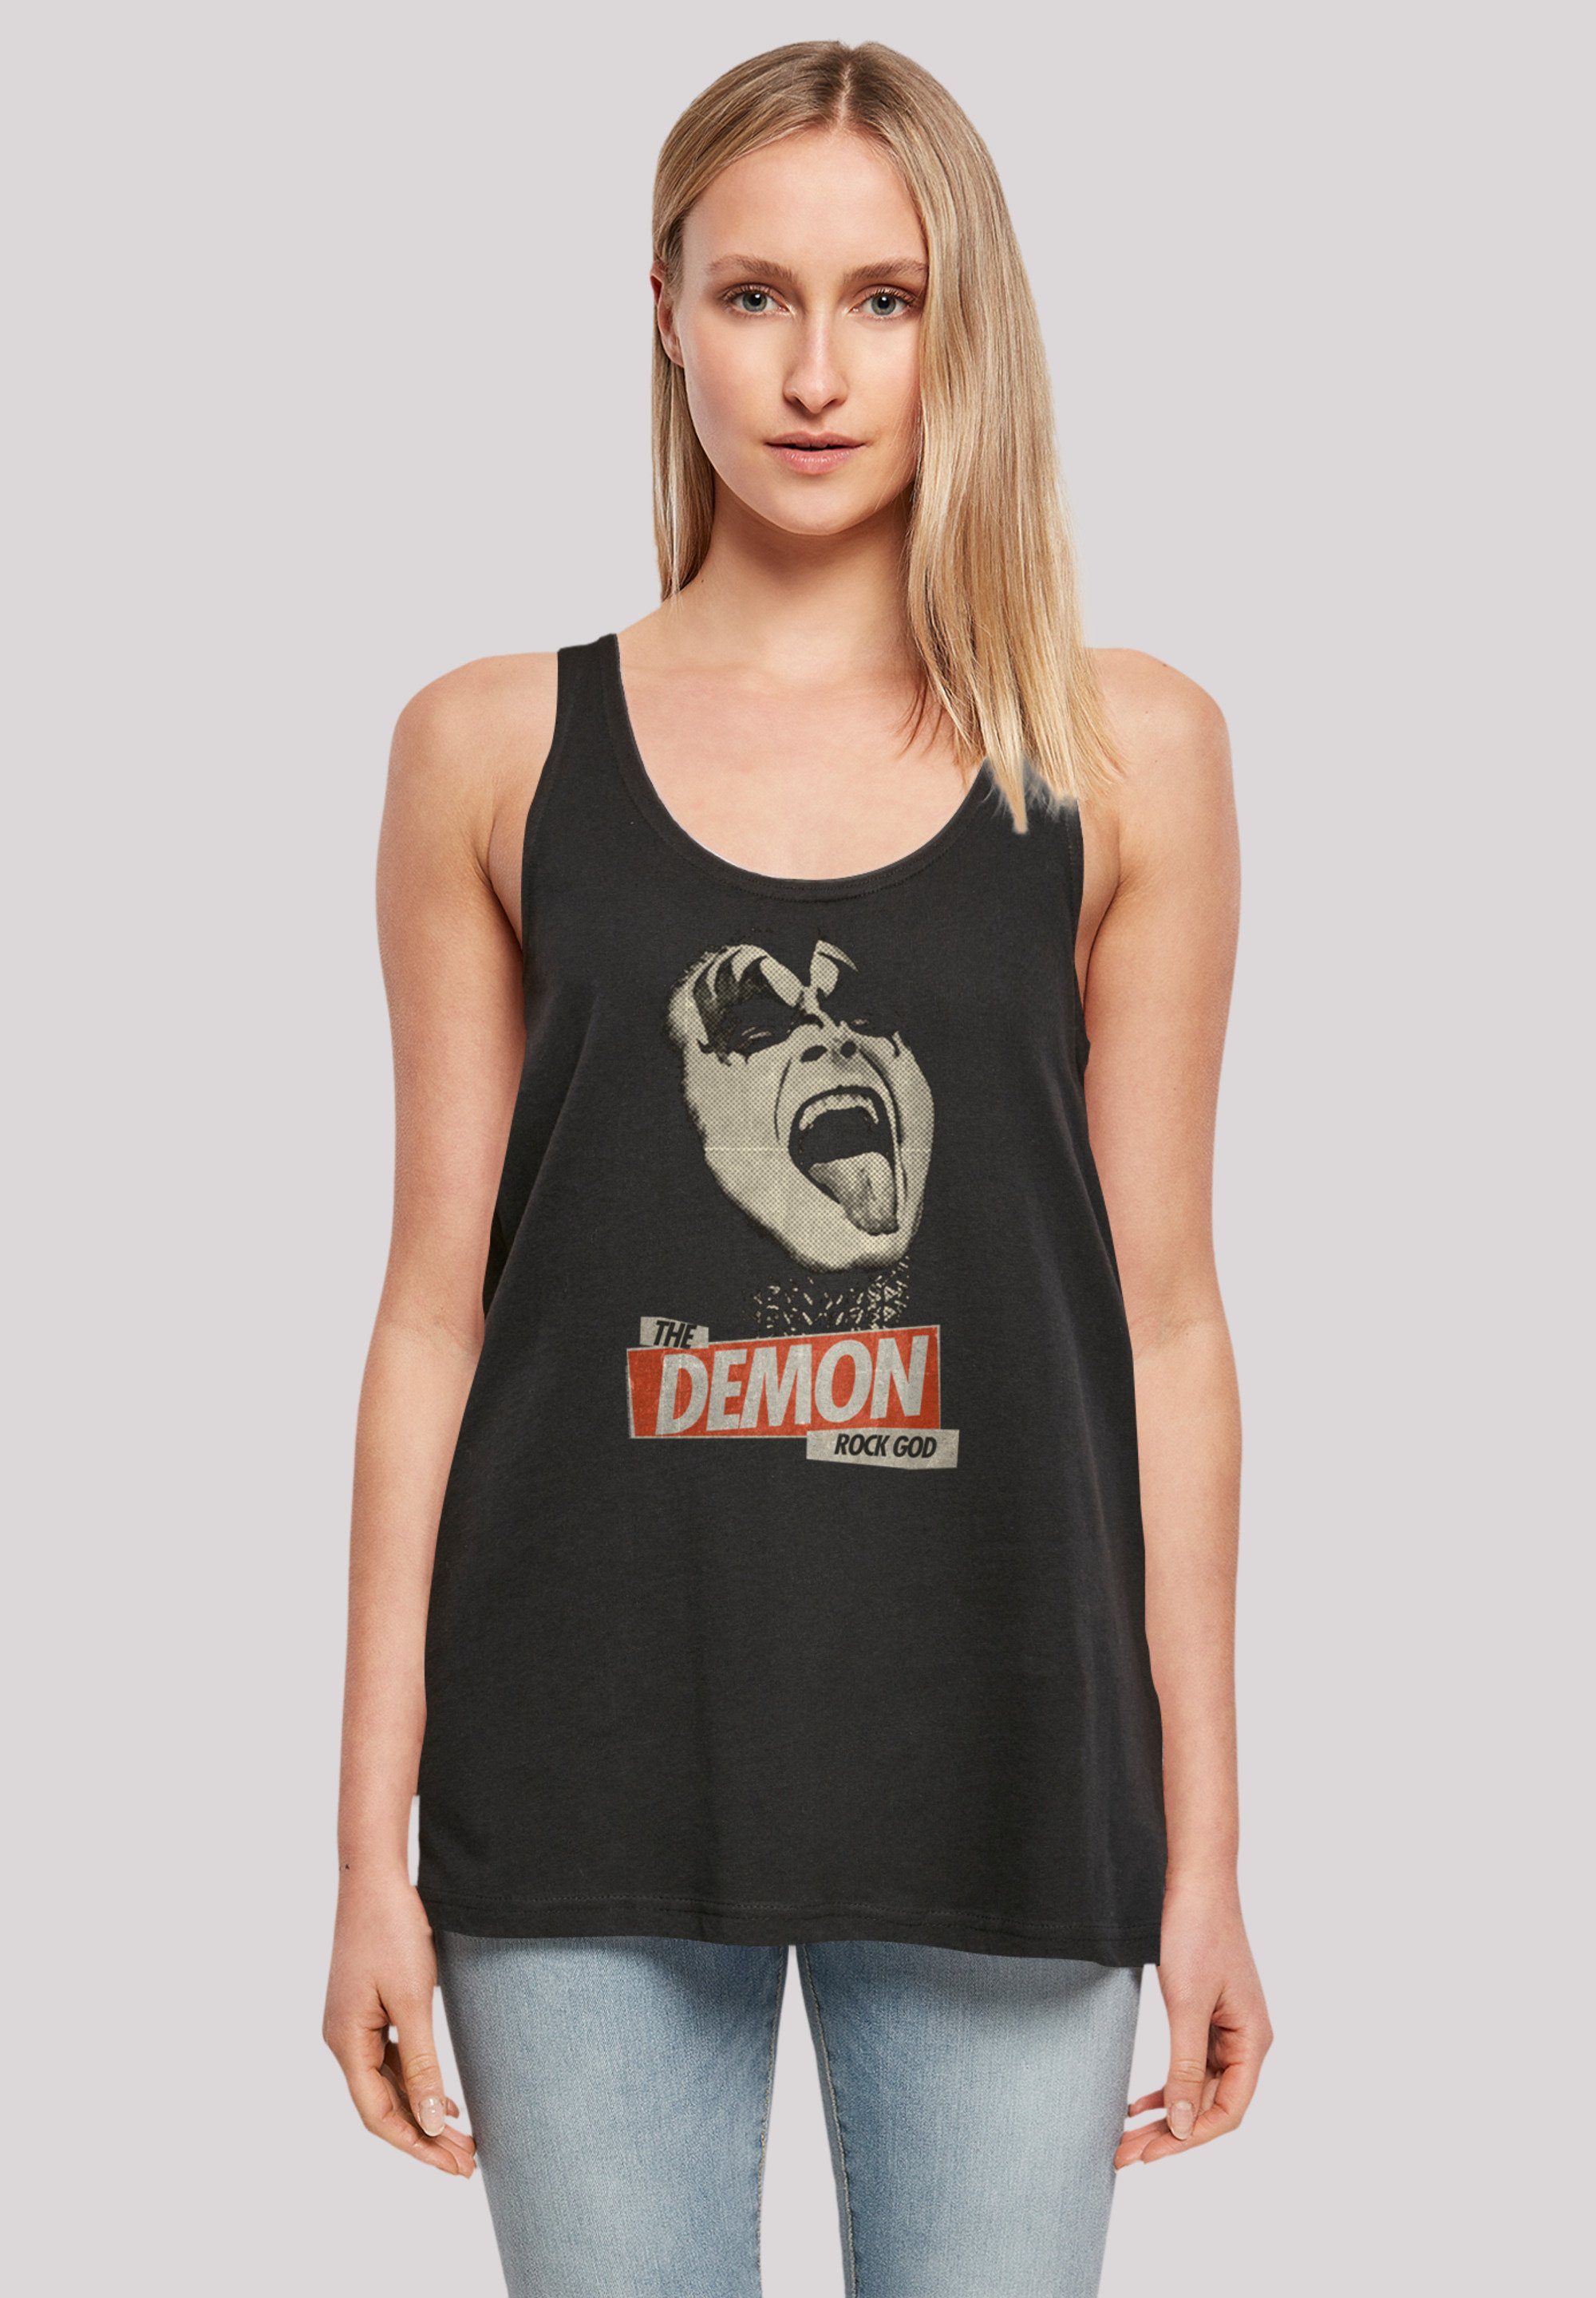 F4NT4STIC T-Shirt Kiss Hard Rock Band Demon Premium Qualität | T-Shirts